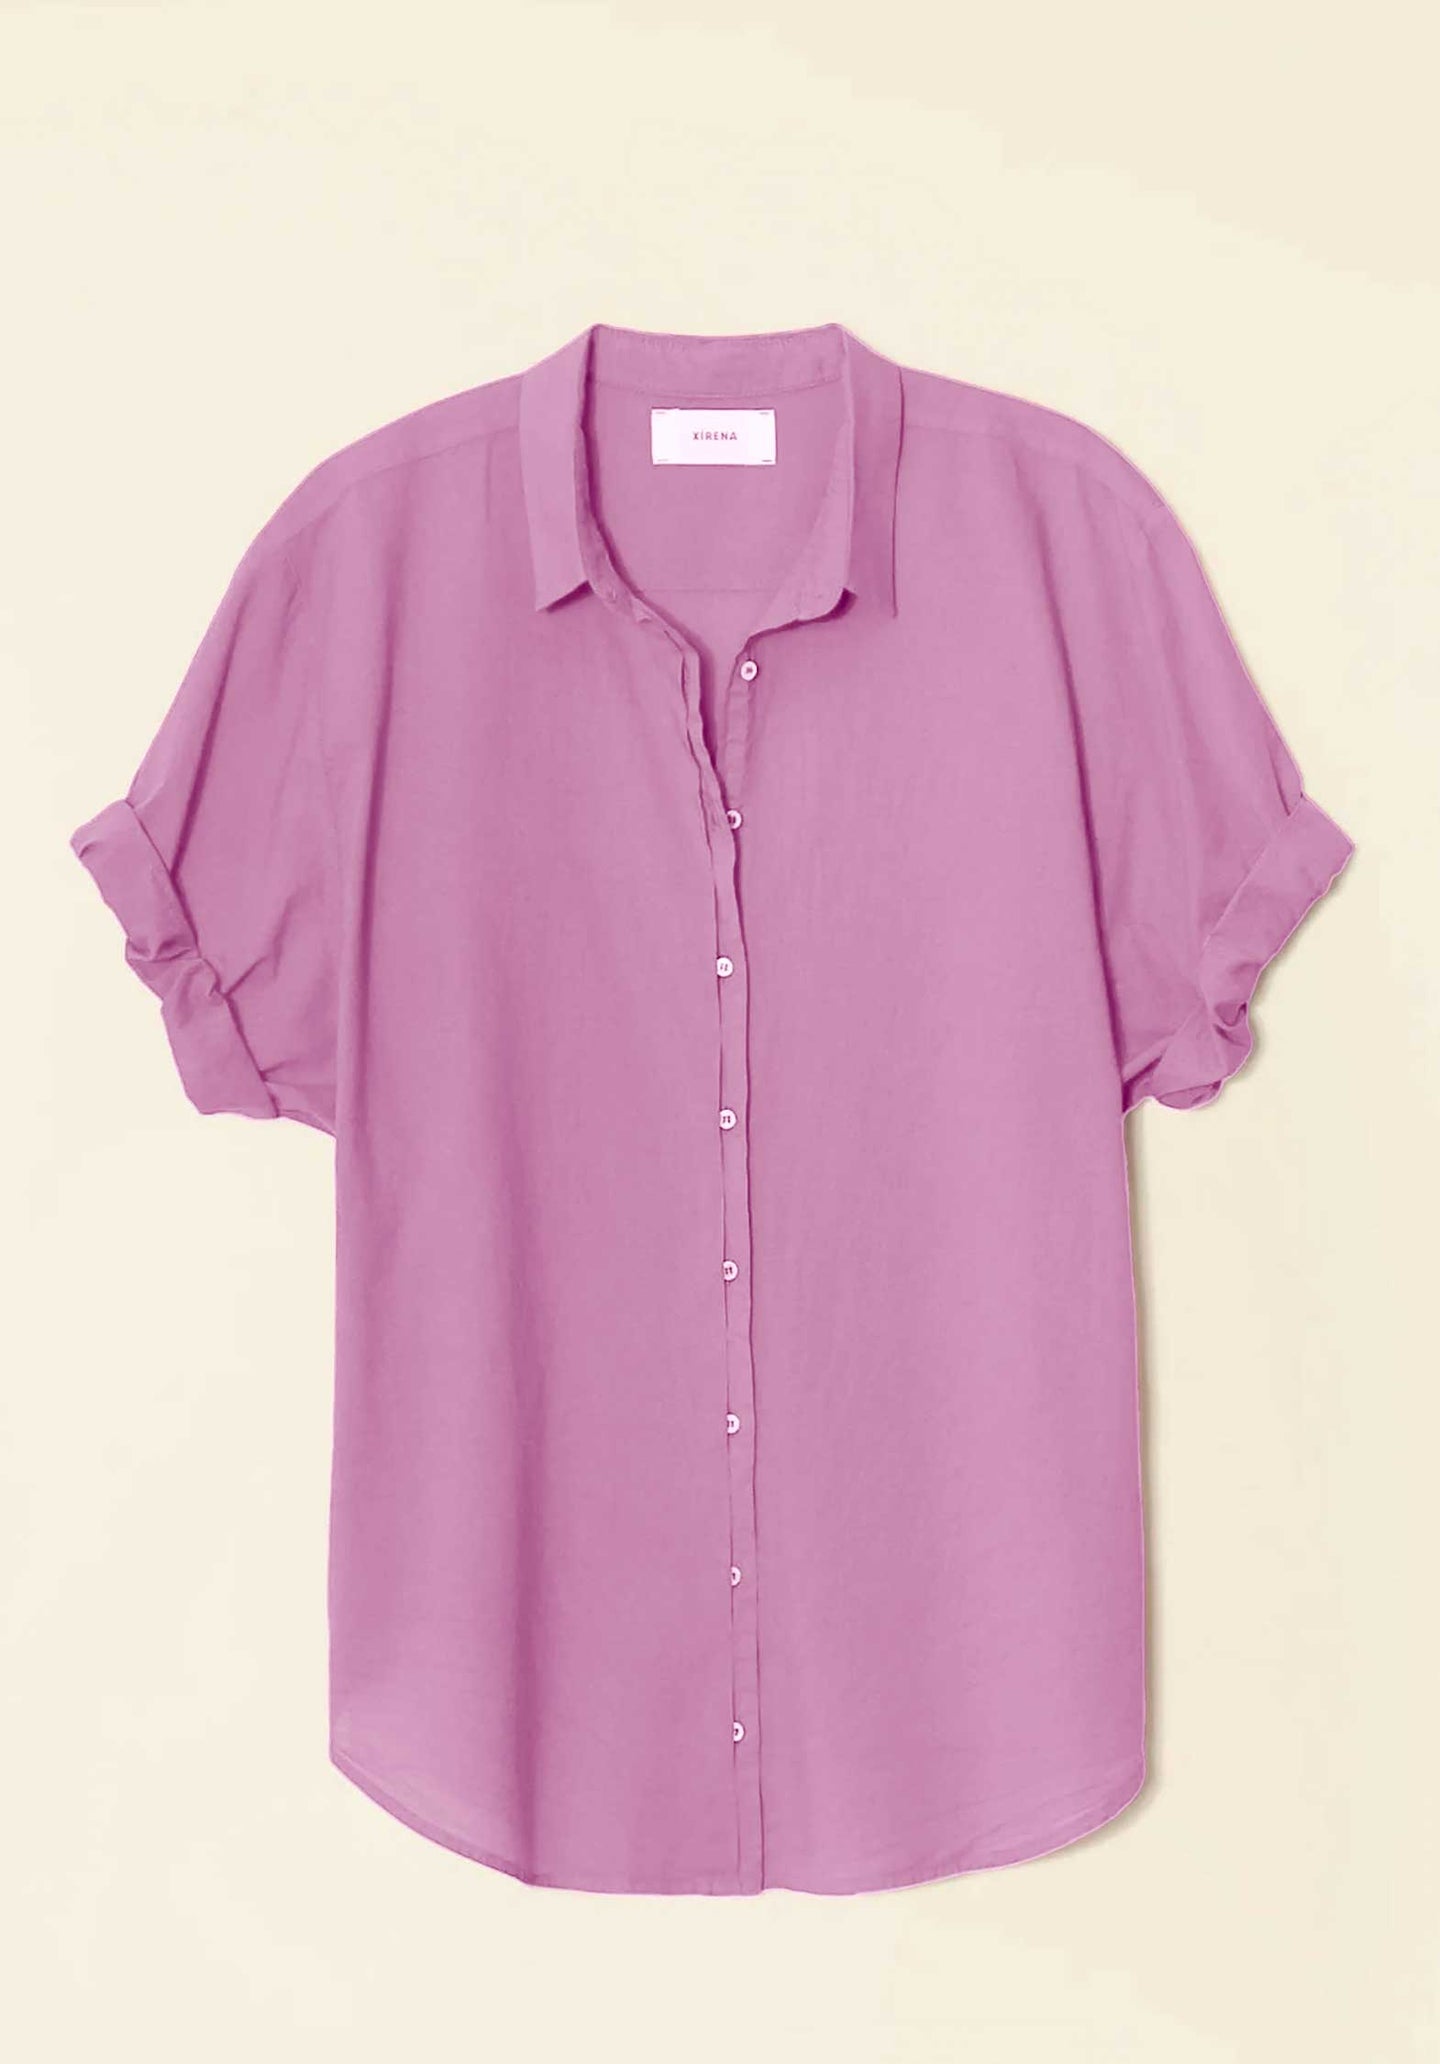 Shirt X5ctp114 Channing Shirt Lavender-Pink